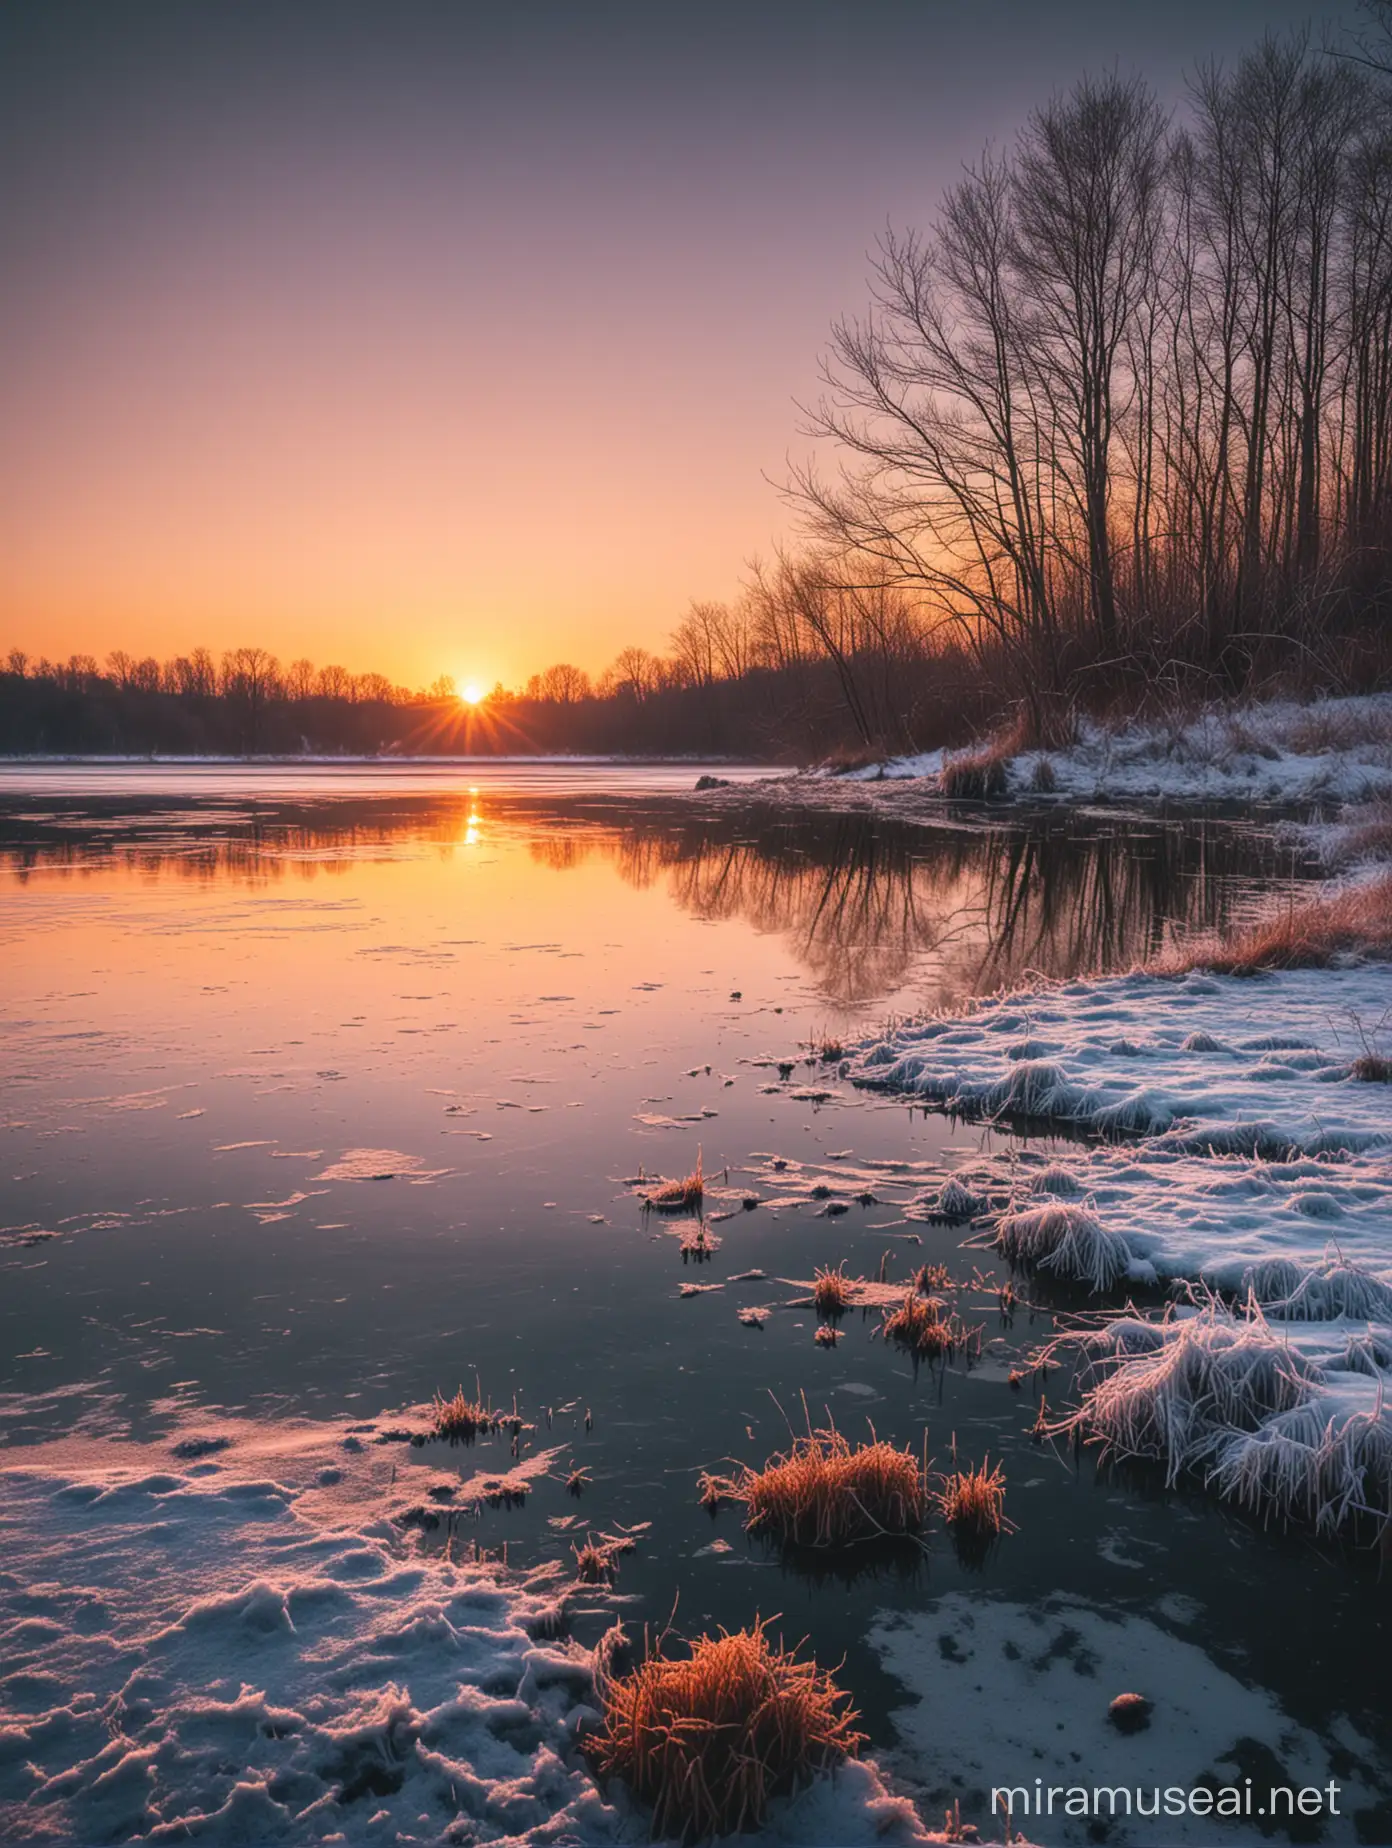 a wonderful photograph from a sunet near a frozen lake, serne feelings, nostalgic vibes, wonderful colors